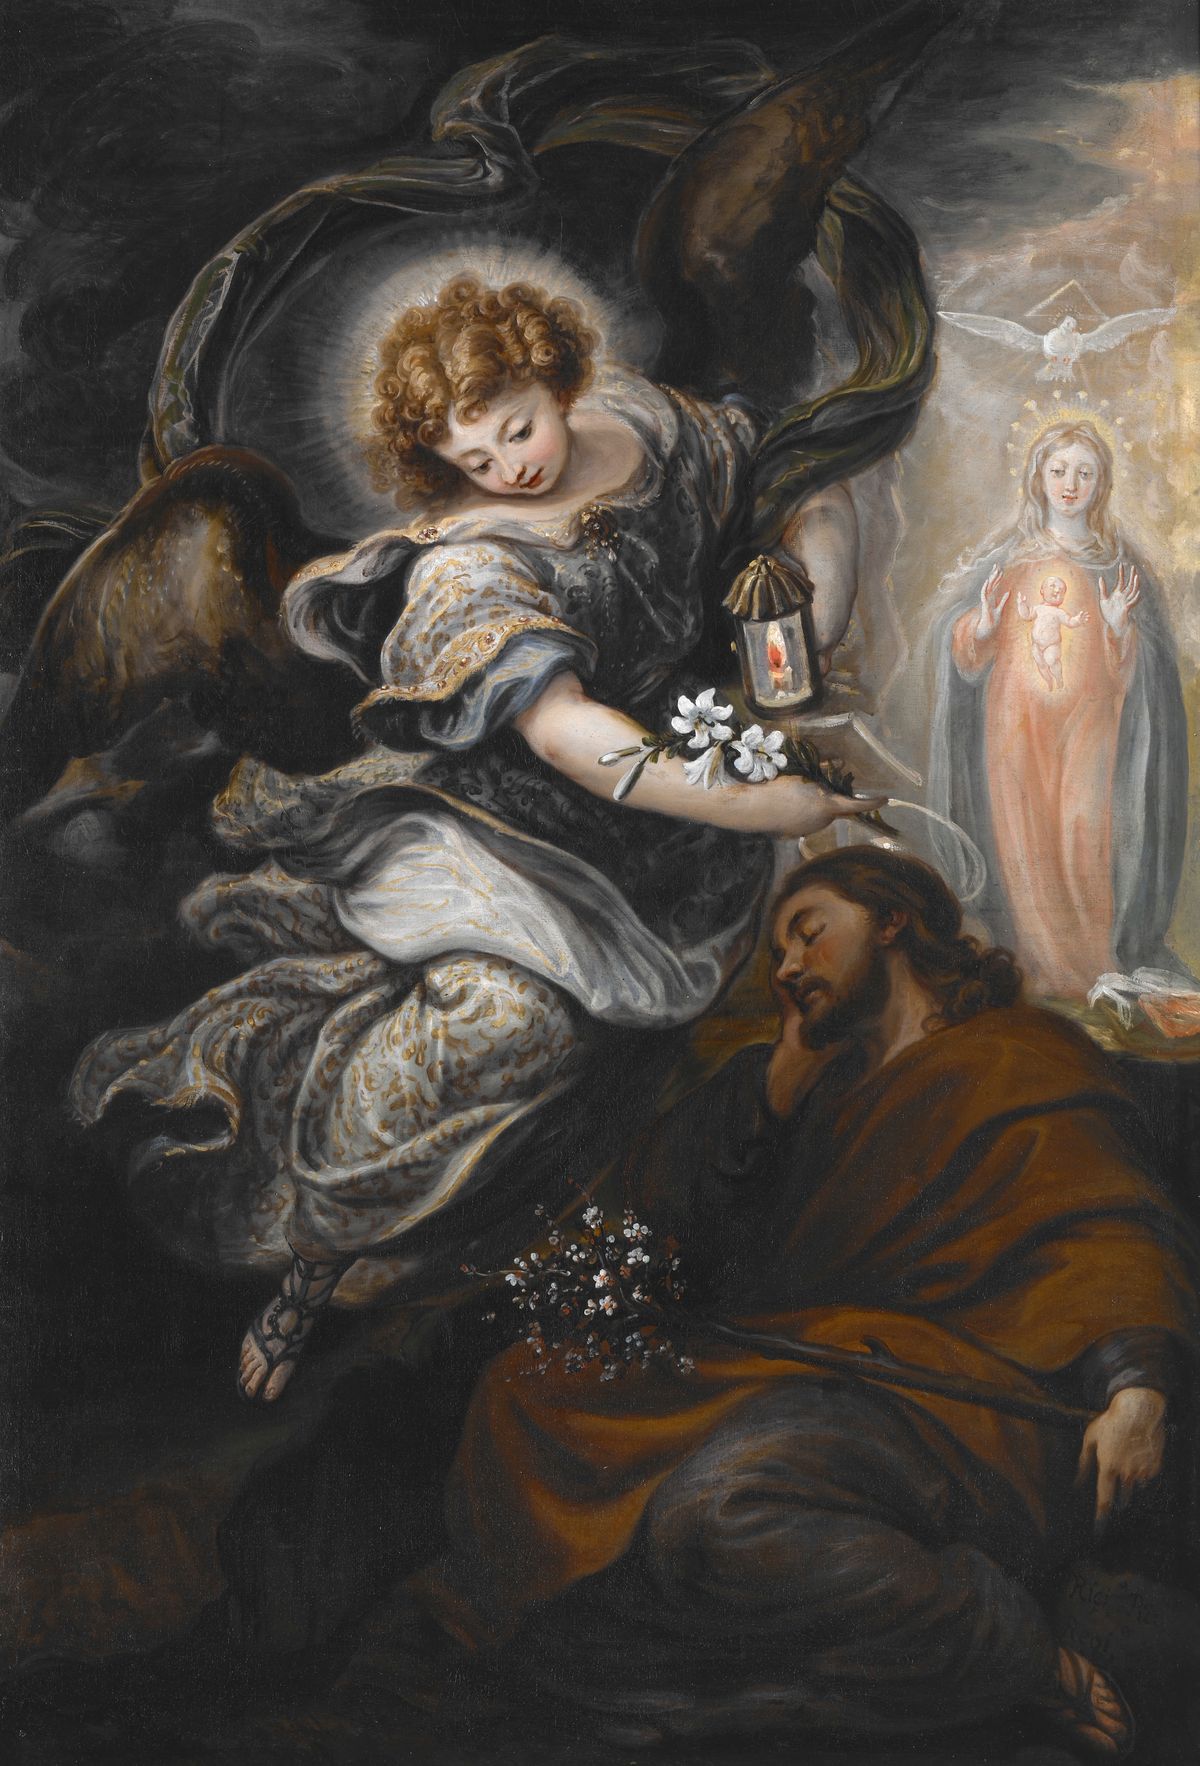 The Dream Of St. Joseph (1665) by Francisco Rizi - Public Domain Bible Painting